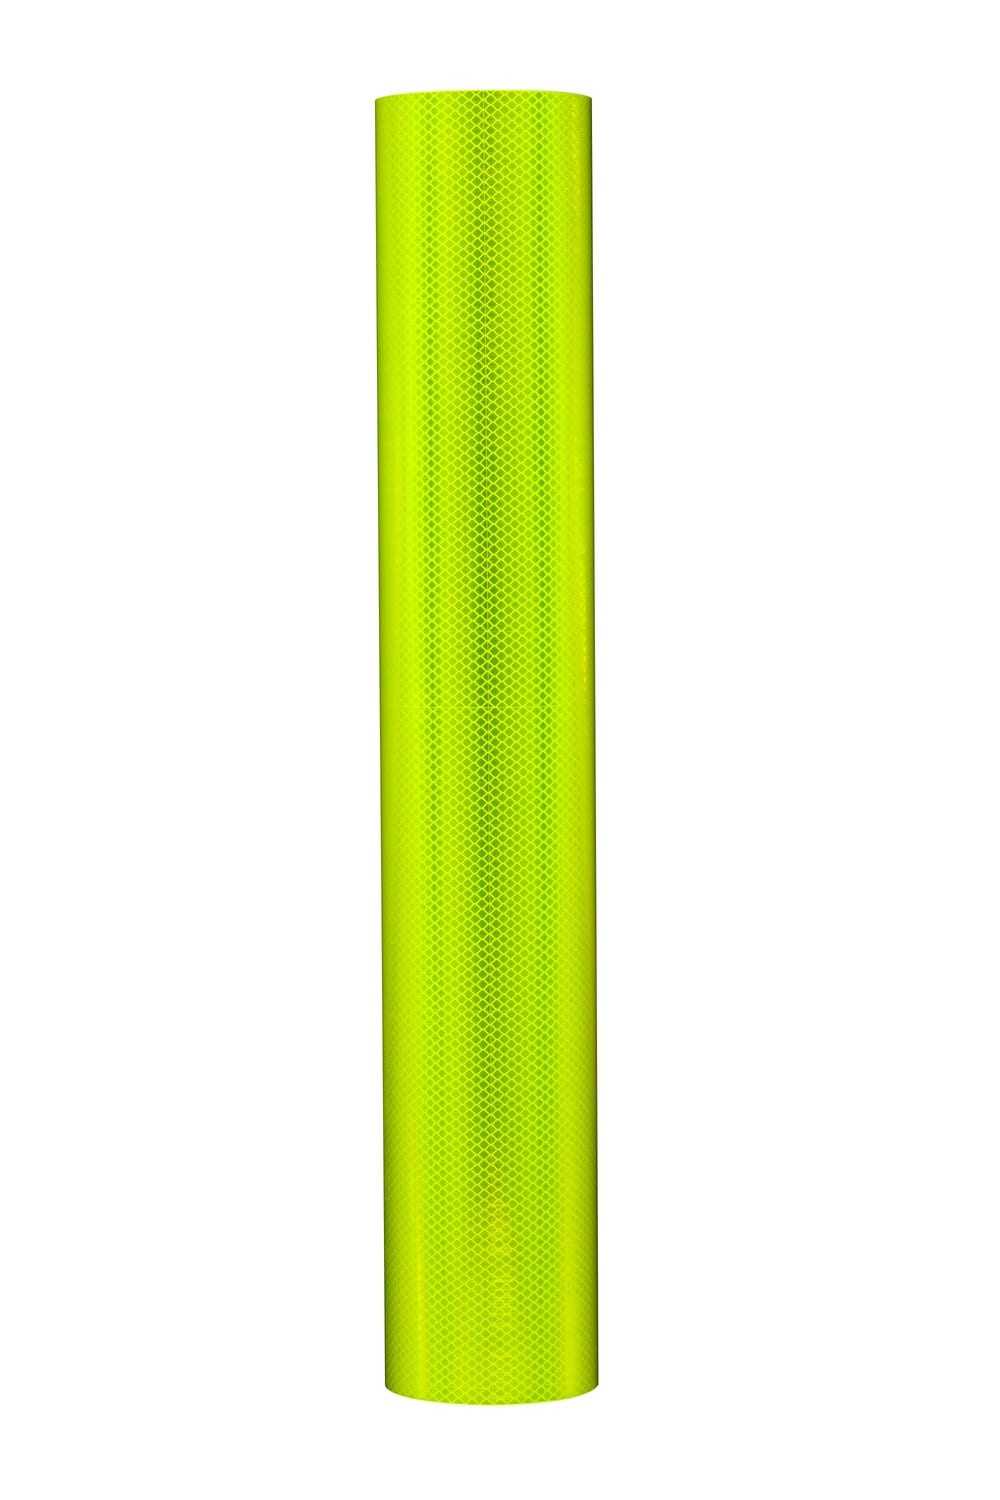 7010390327 - 3M Diamond Grade DG³ Reflective Sheeting 4083 Fluorescent Yellow
Green, 48 in x 10 yd